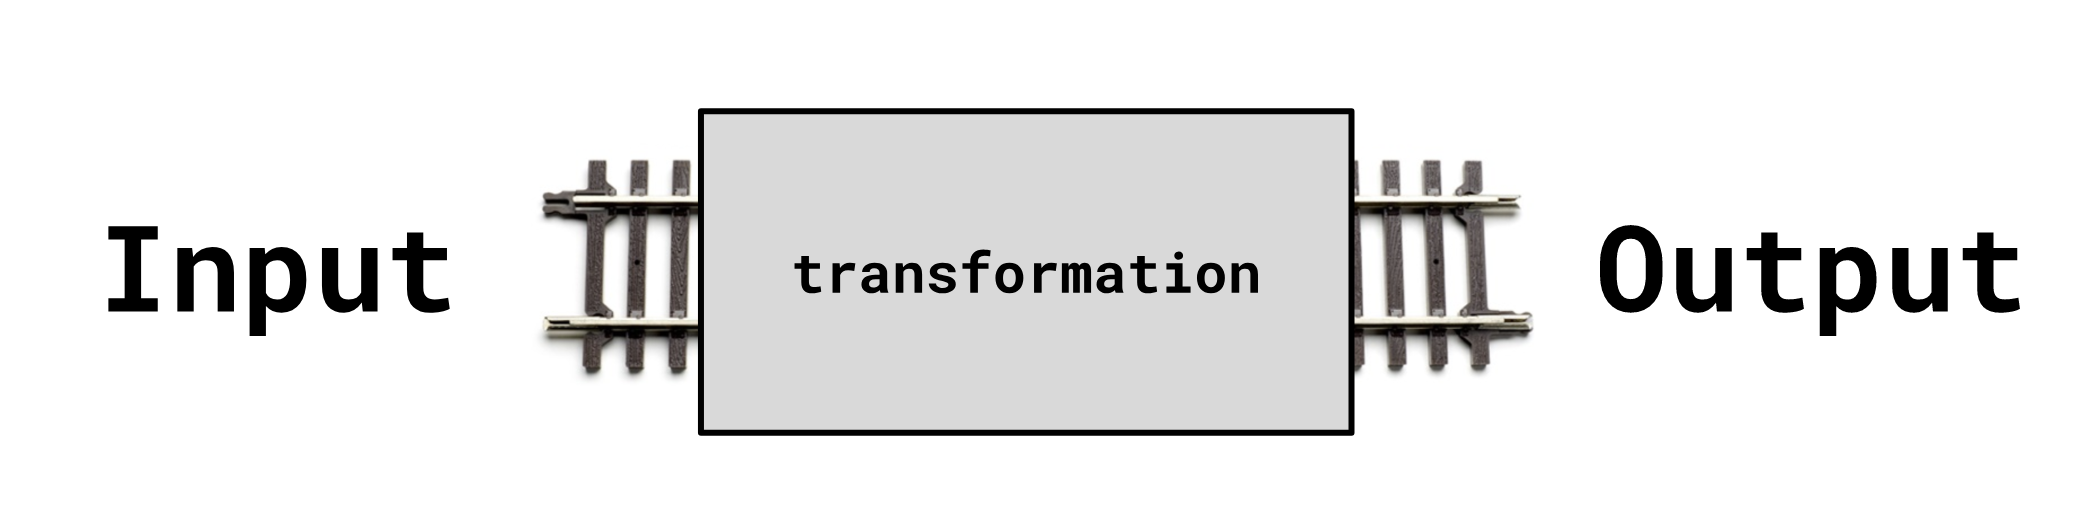 Railway I/O - input -> transform -> output